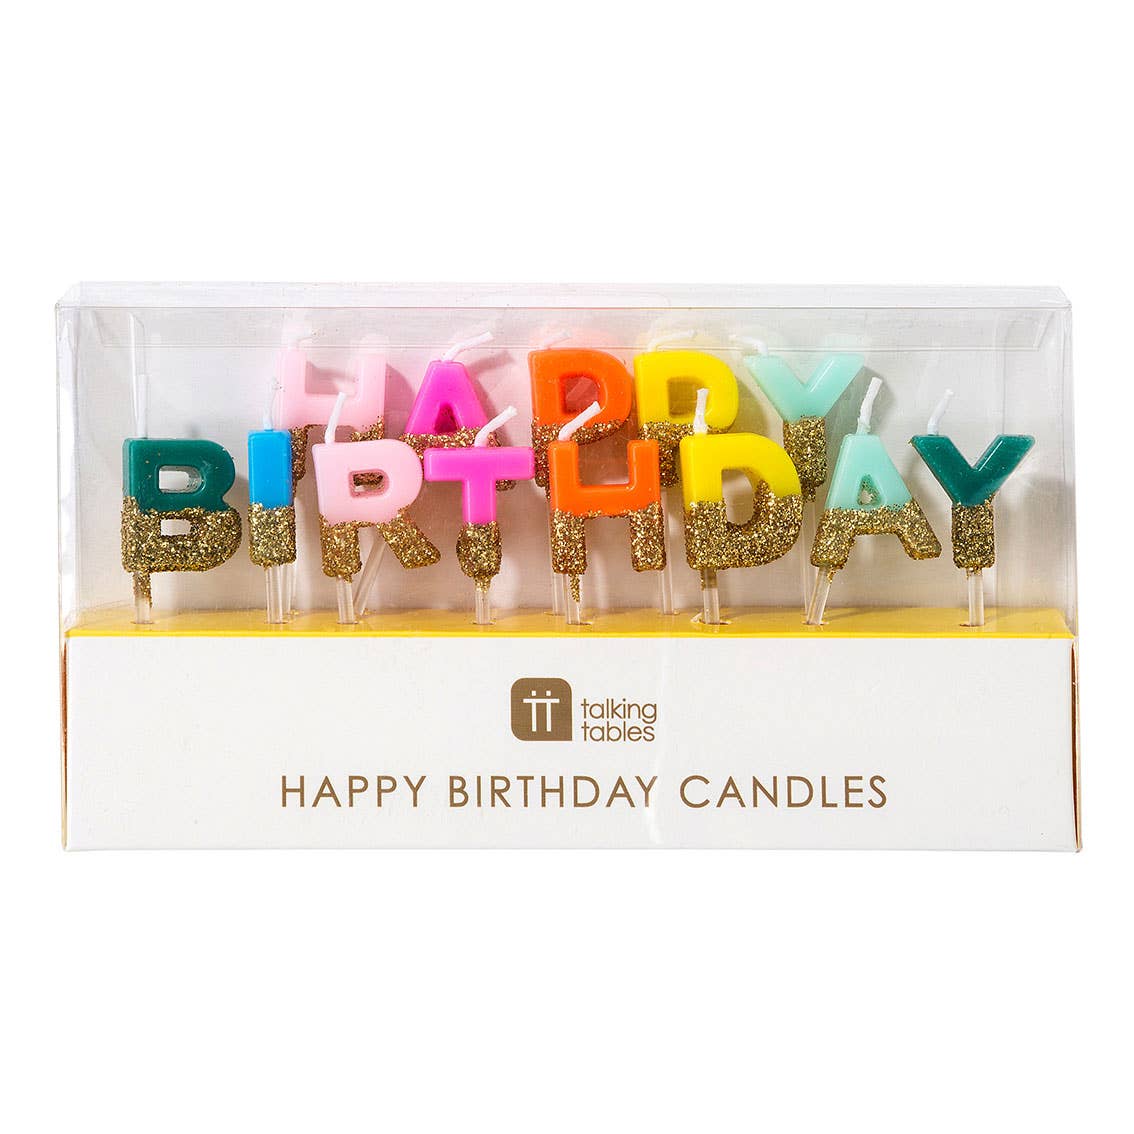 Rainbow Happy Birthday Candles - Oh My Darling Party Co-birthday candlesbright rainbowcake candles #Fringe_Backdrop#